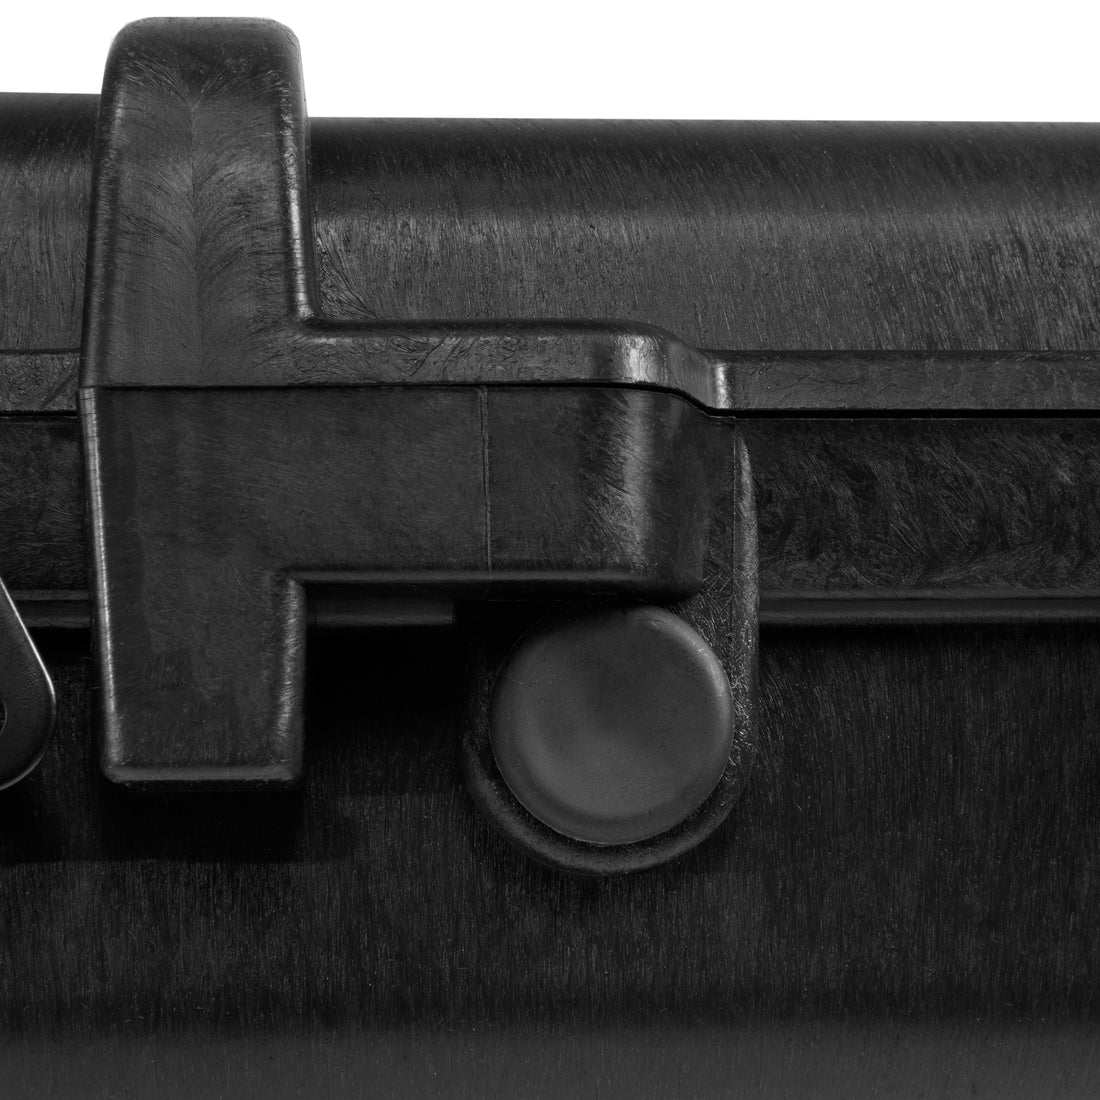 Boyt- H48SG Single Long Gun Case